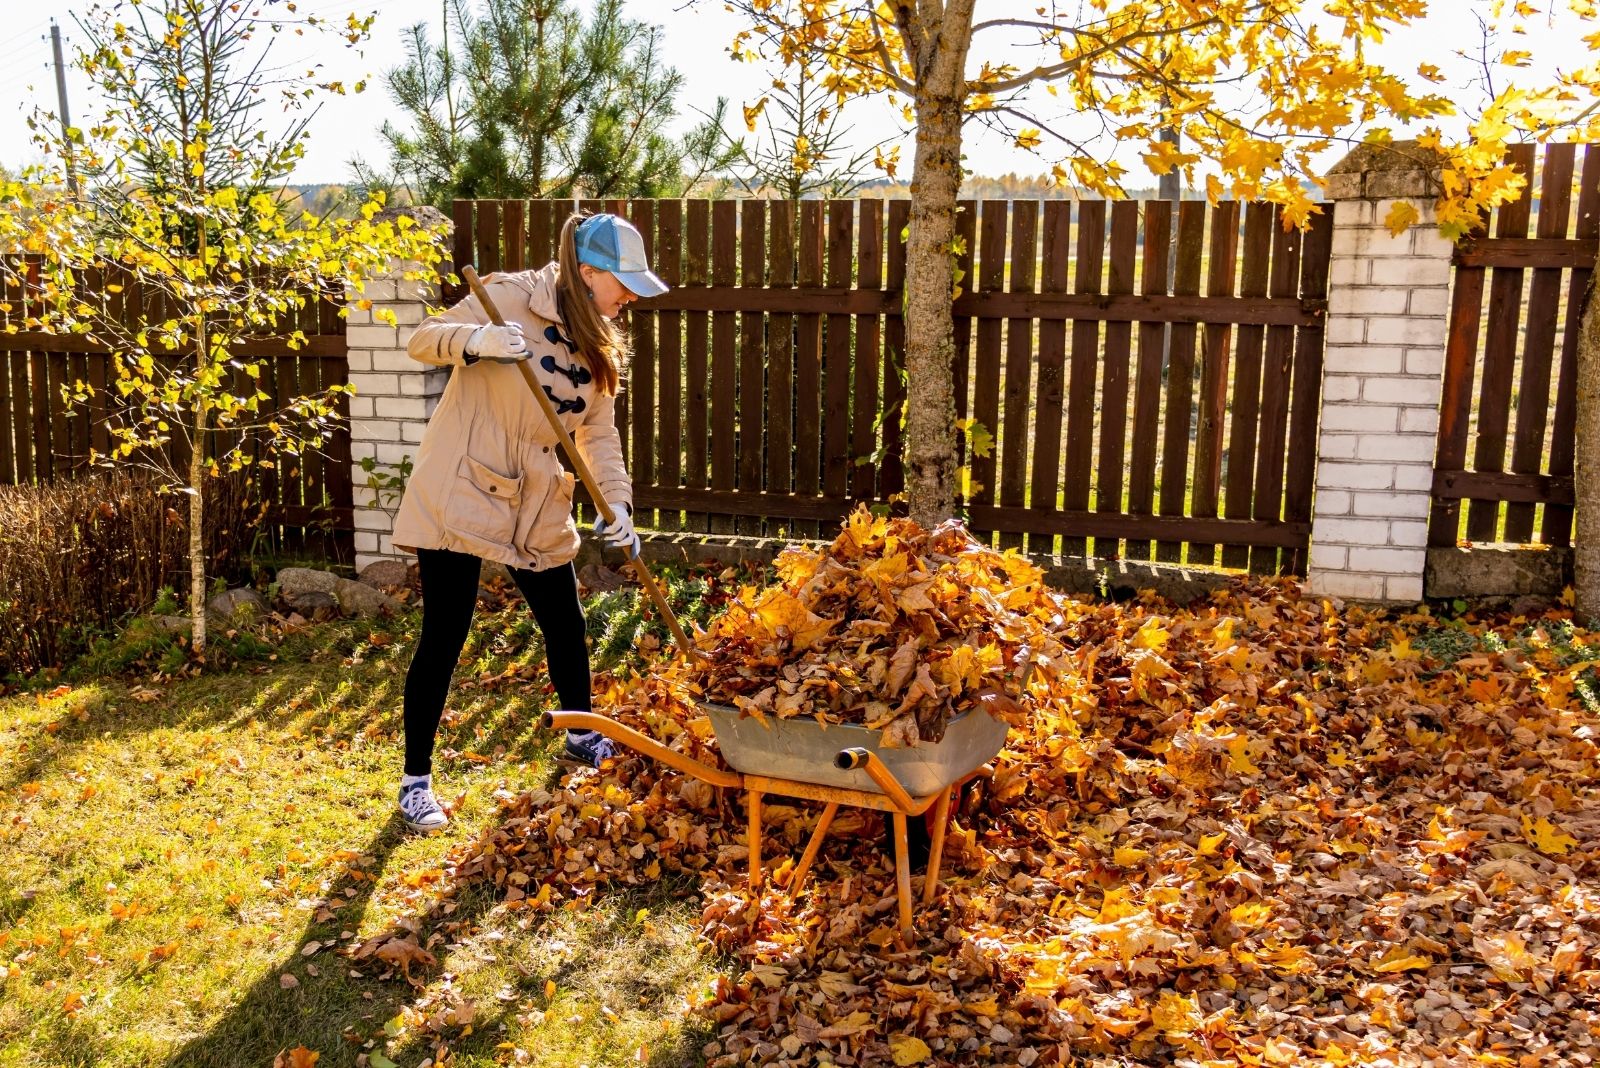 a girl is raking leaves in the garden